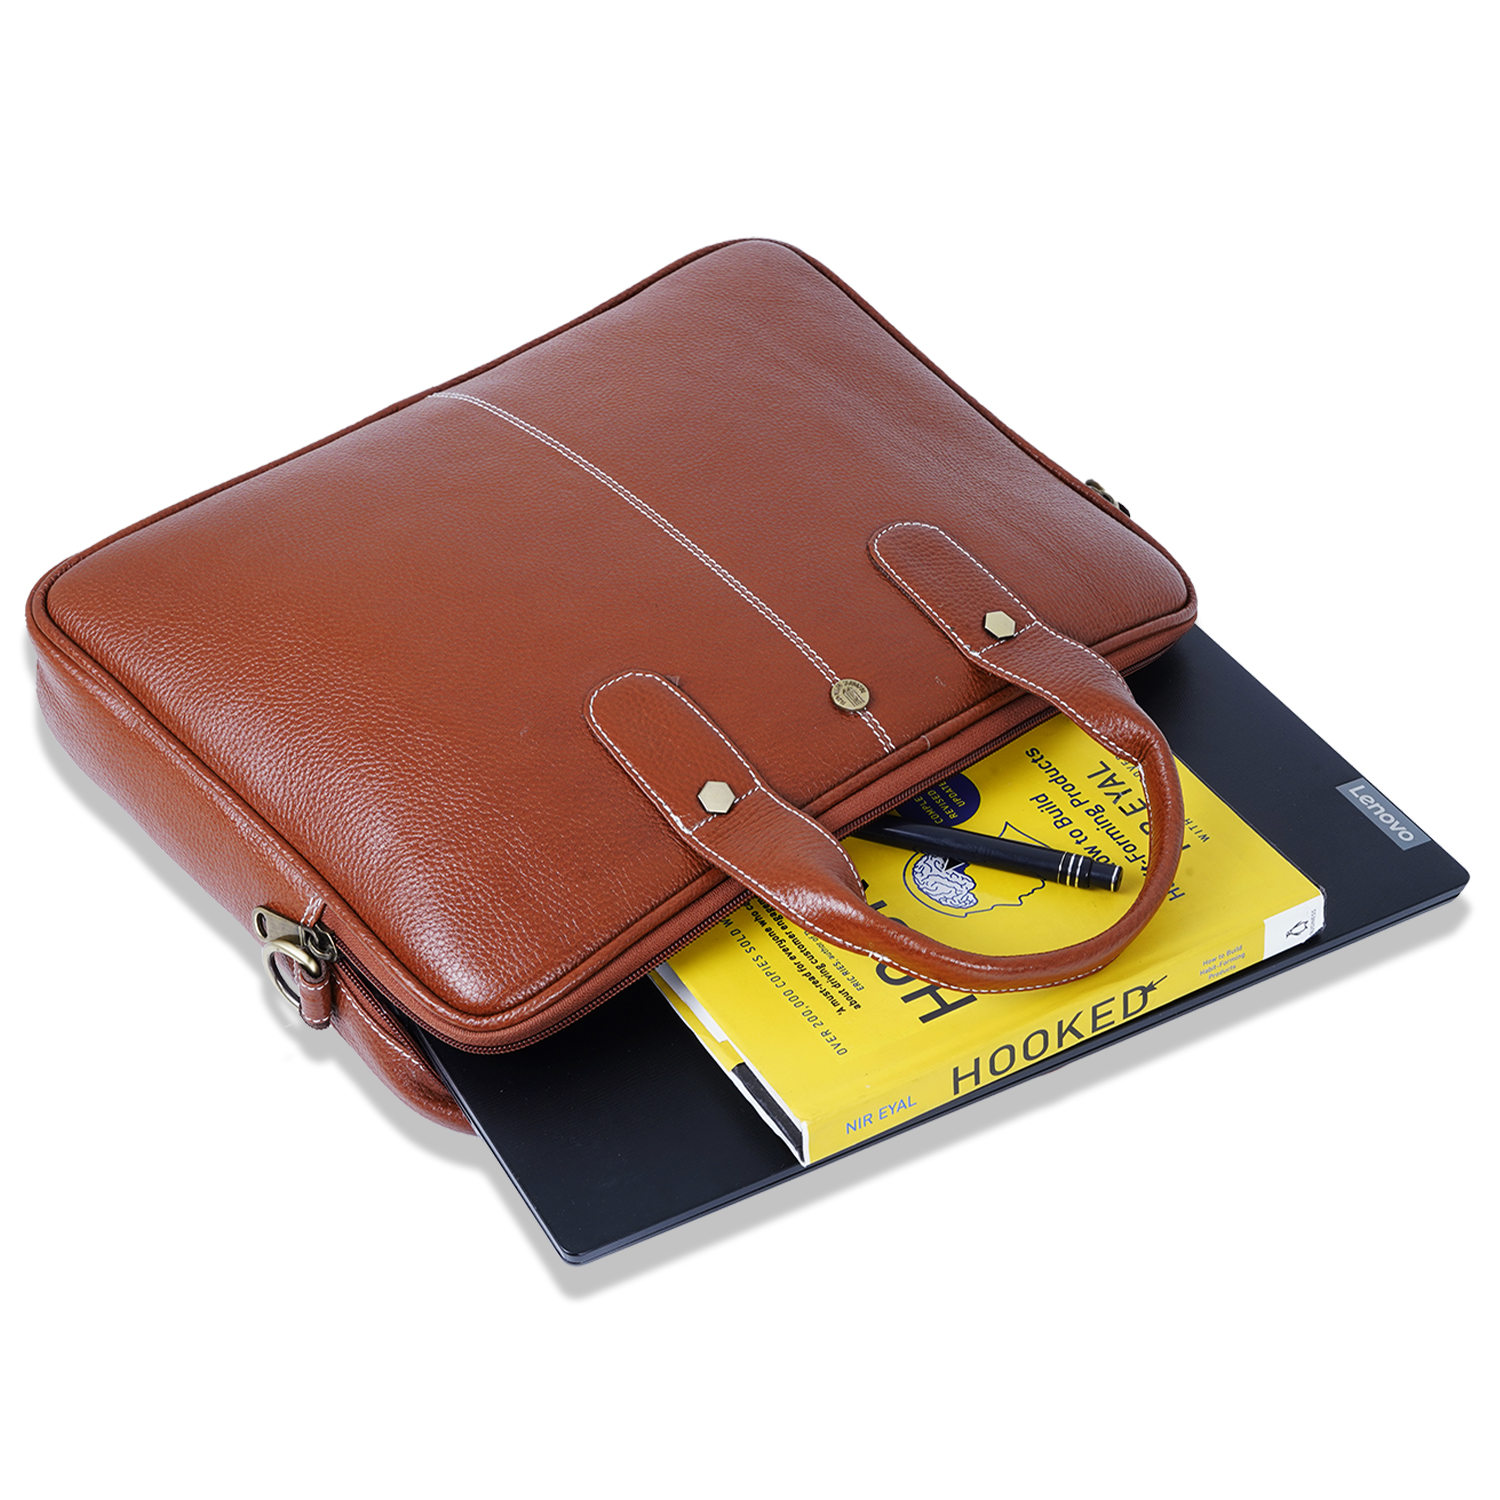  Laptop Messenger Bag for Men | MacBook| Tan-asset-157